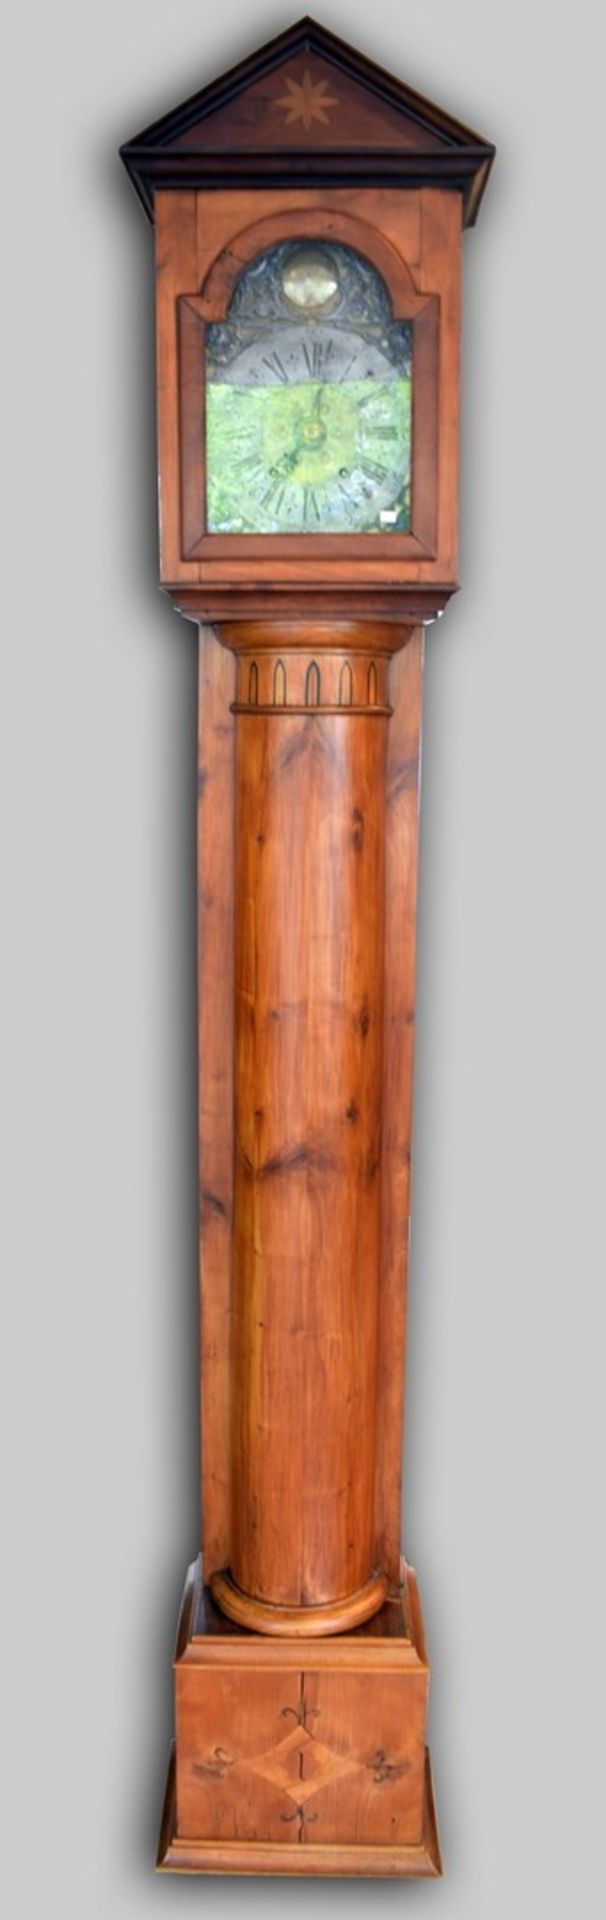 Biedermeier-Standuhr Kirschbaumkorpus, kantiger Sockel, halbrunder Säulenschaft zum öffnen, kantiges